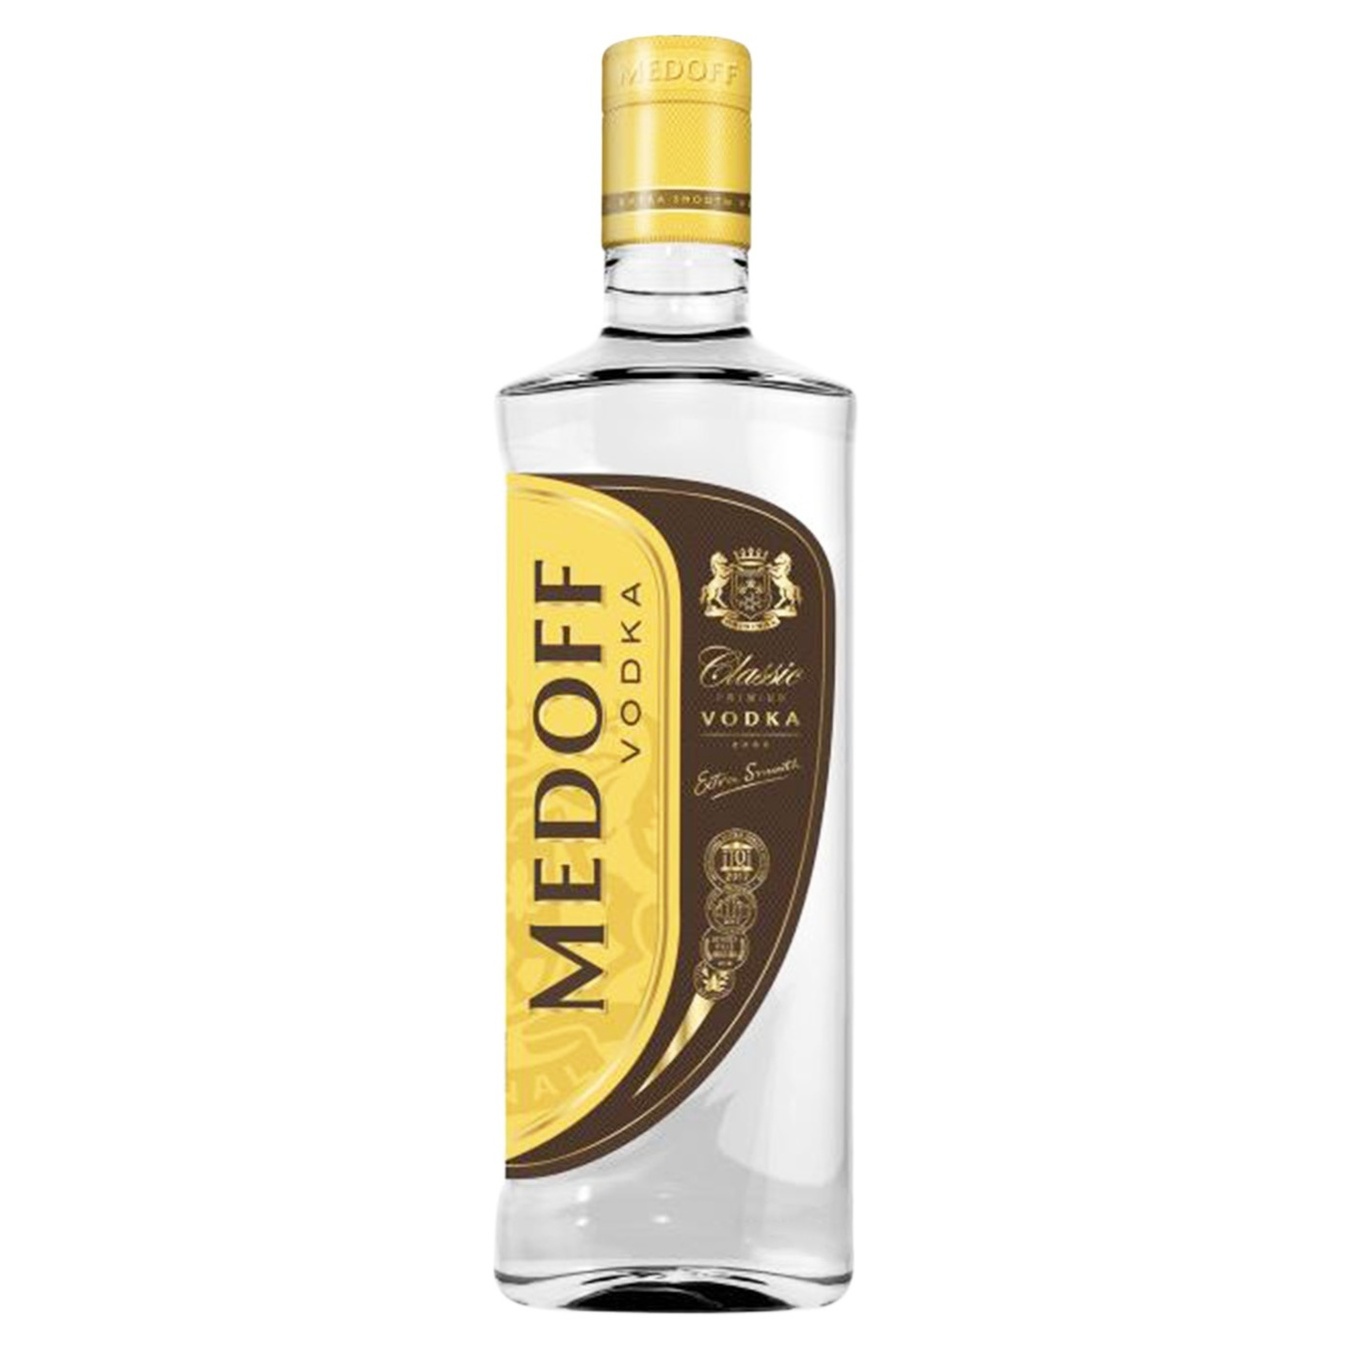 Vodka Medoff Classic 40% 0.35 l